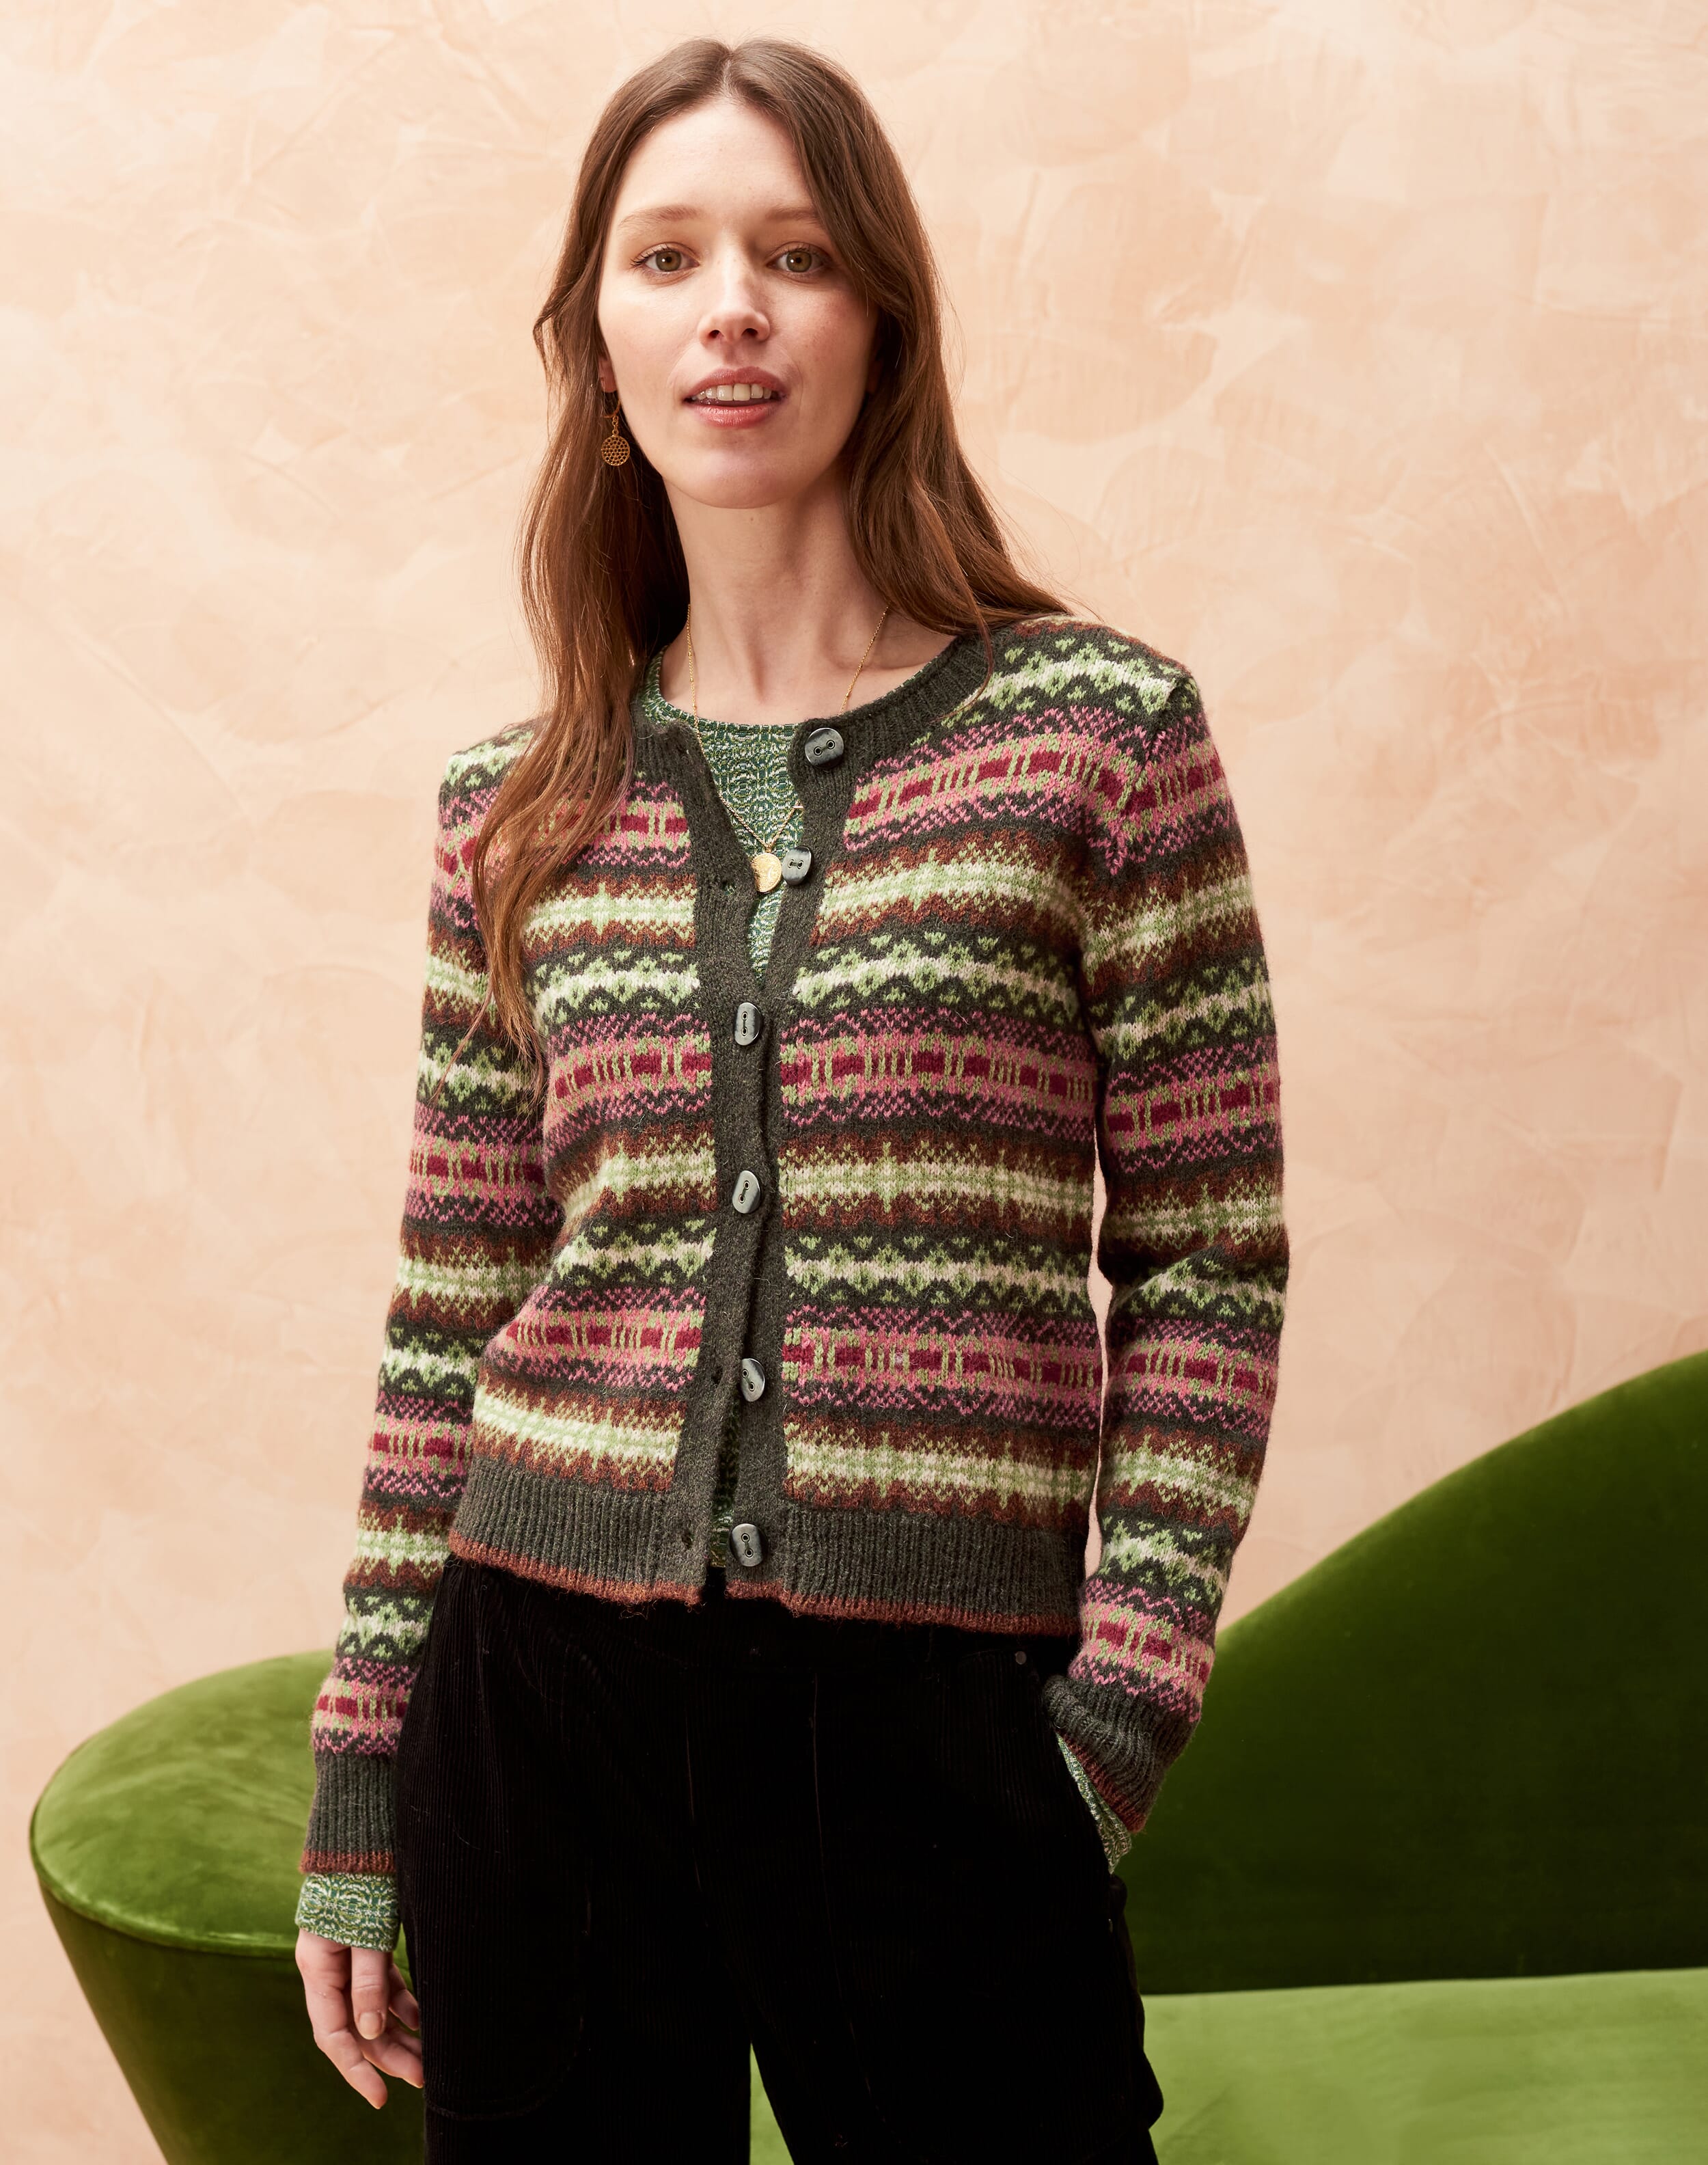 Women's Wool Cardigan 100% Wool Fair Isle Sweater Handknitted Fair